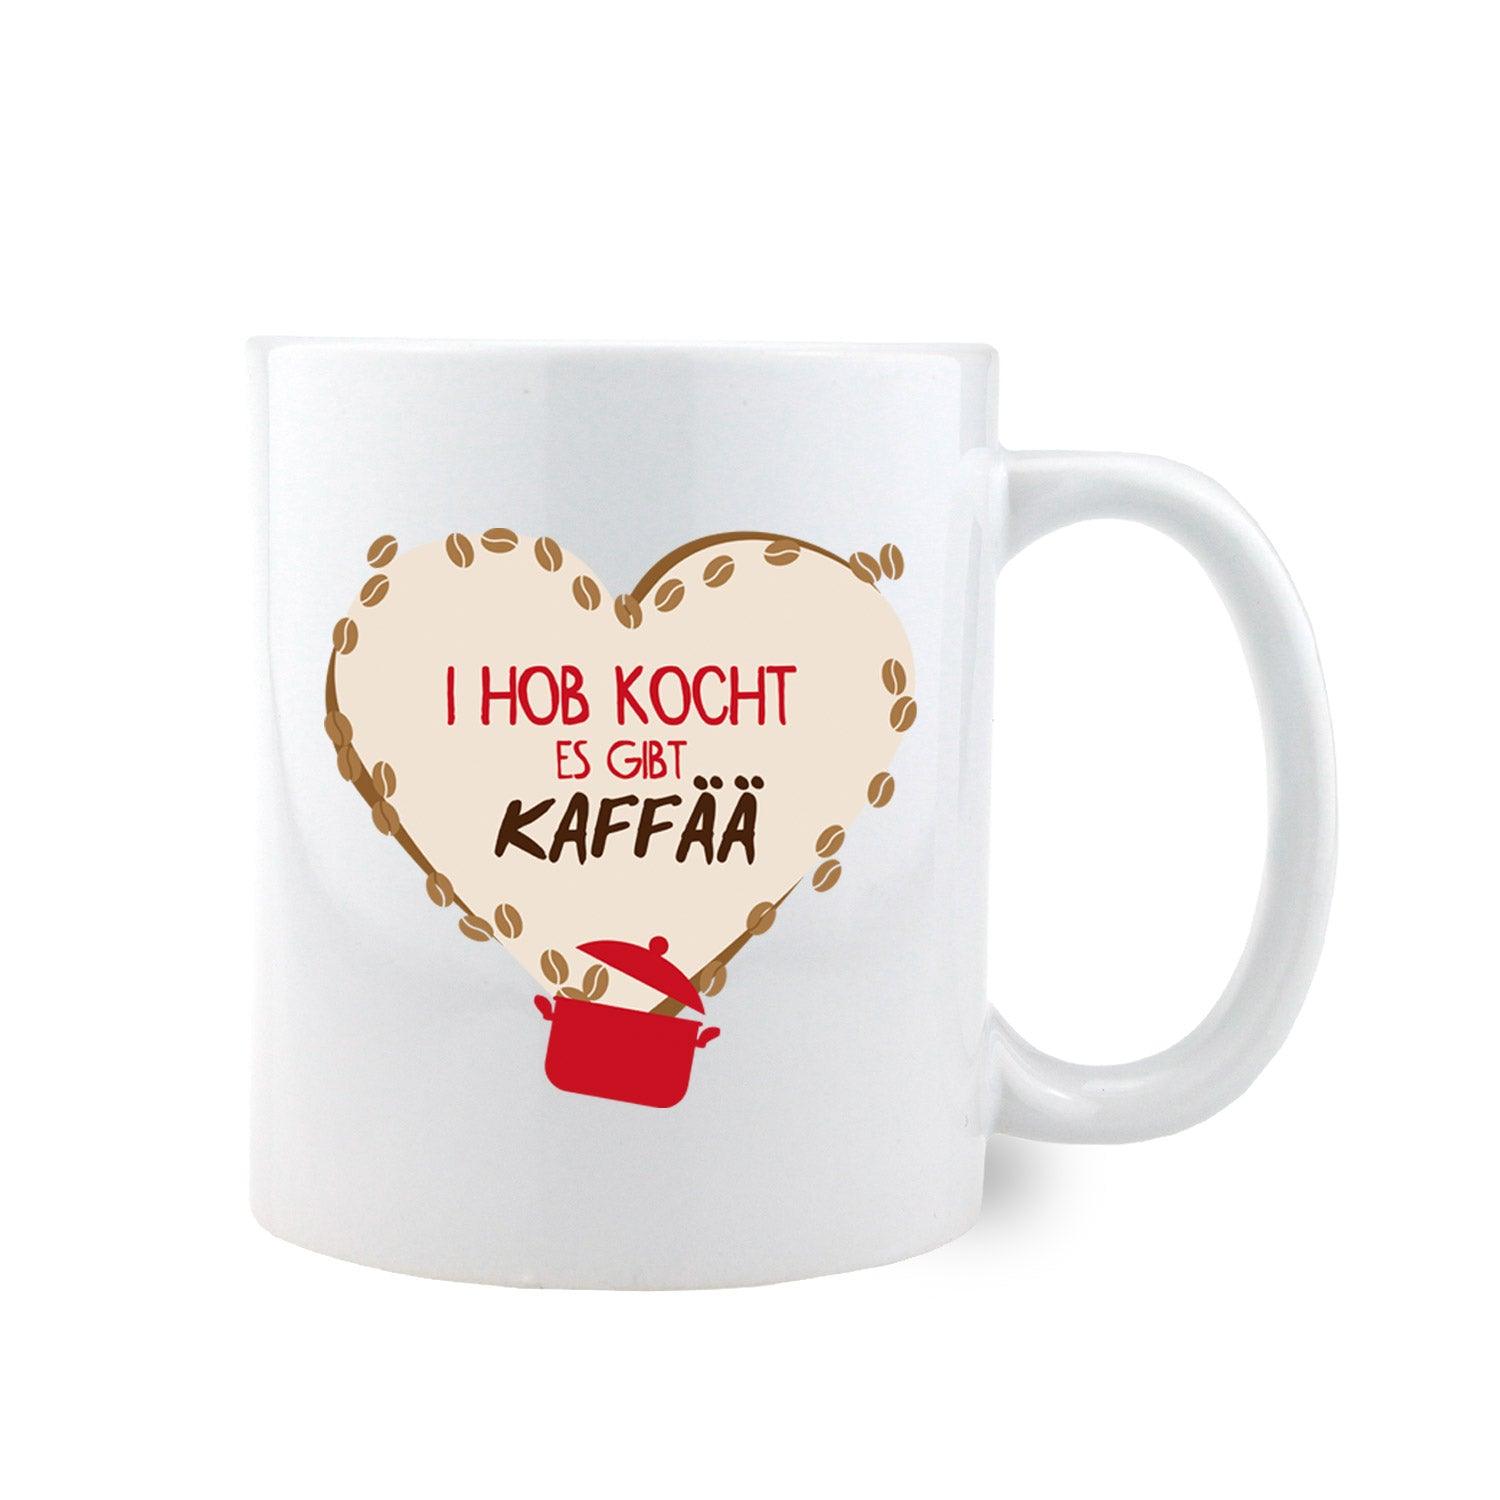 Kaffee-Haferl "I hob kocht, es gibt Kaffää" - bavariashop - mei LebensGfui